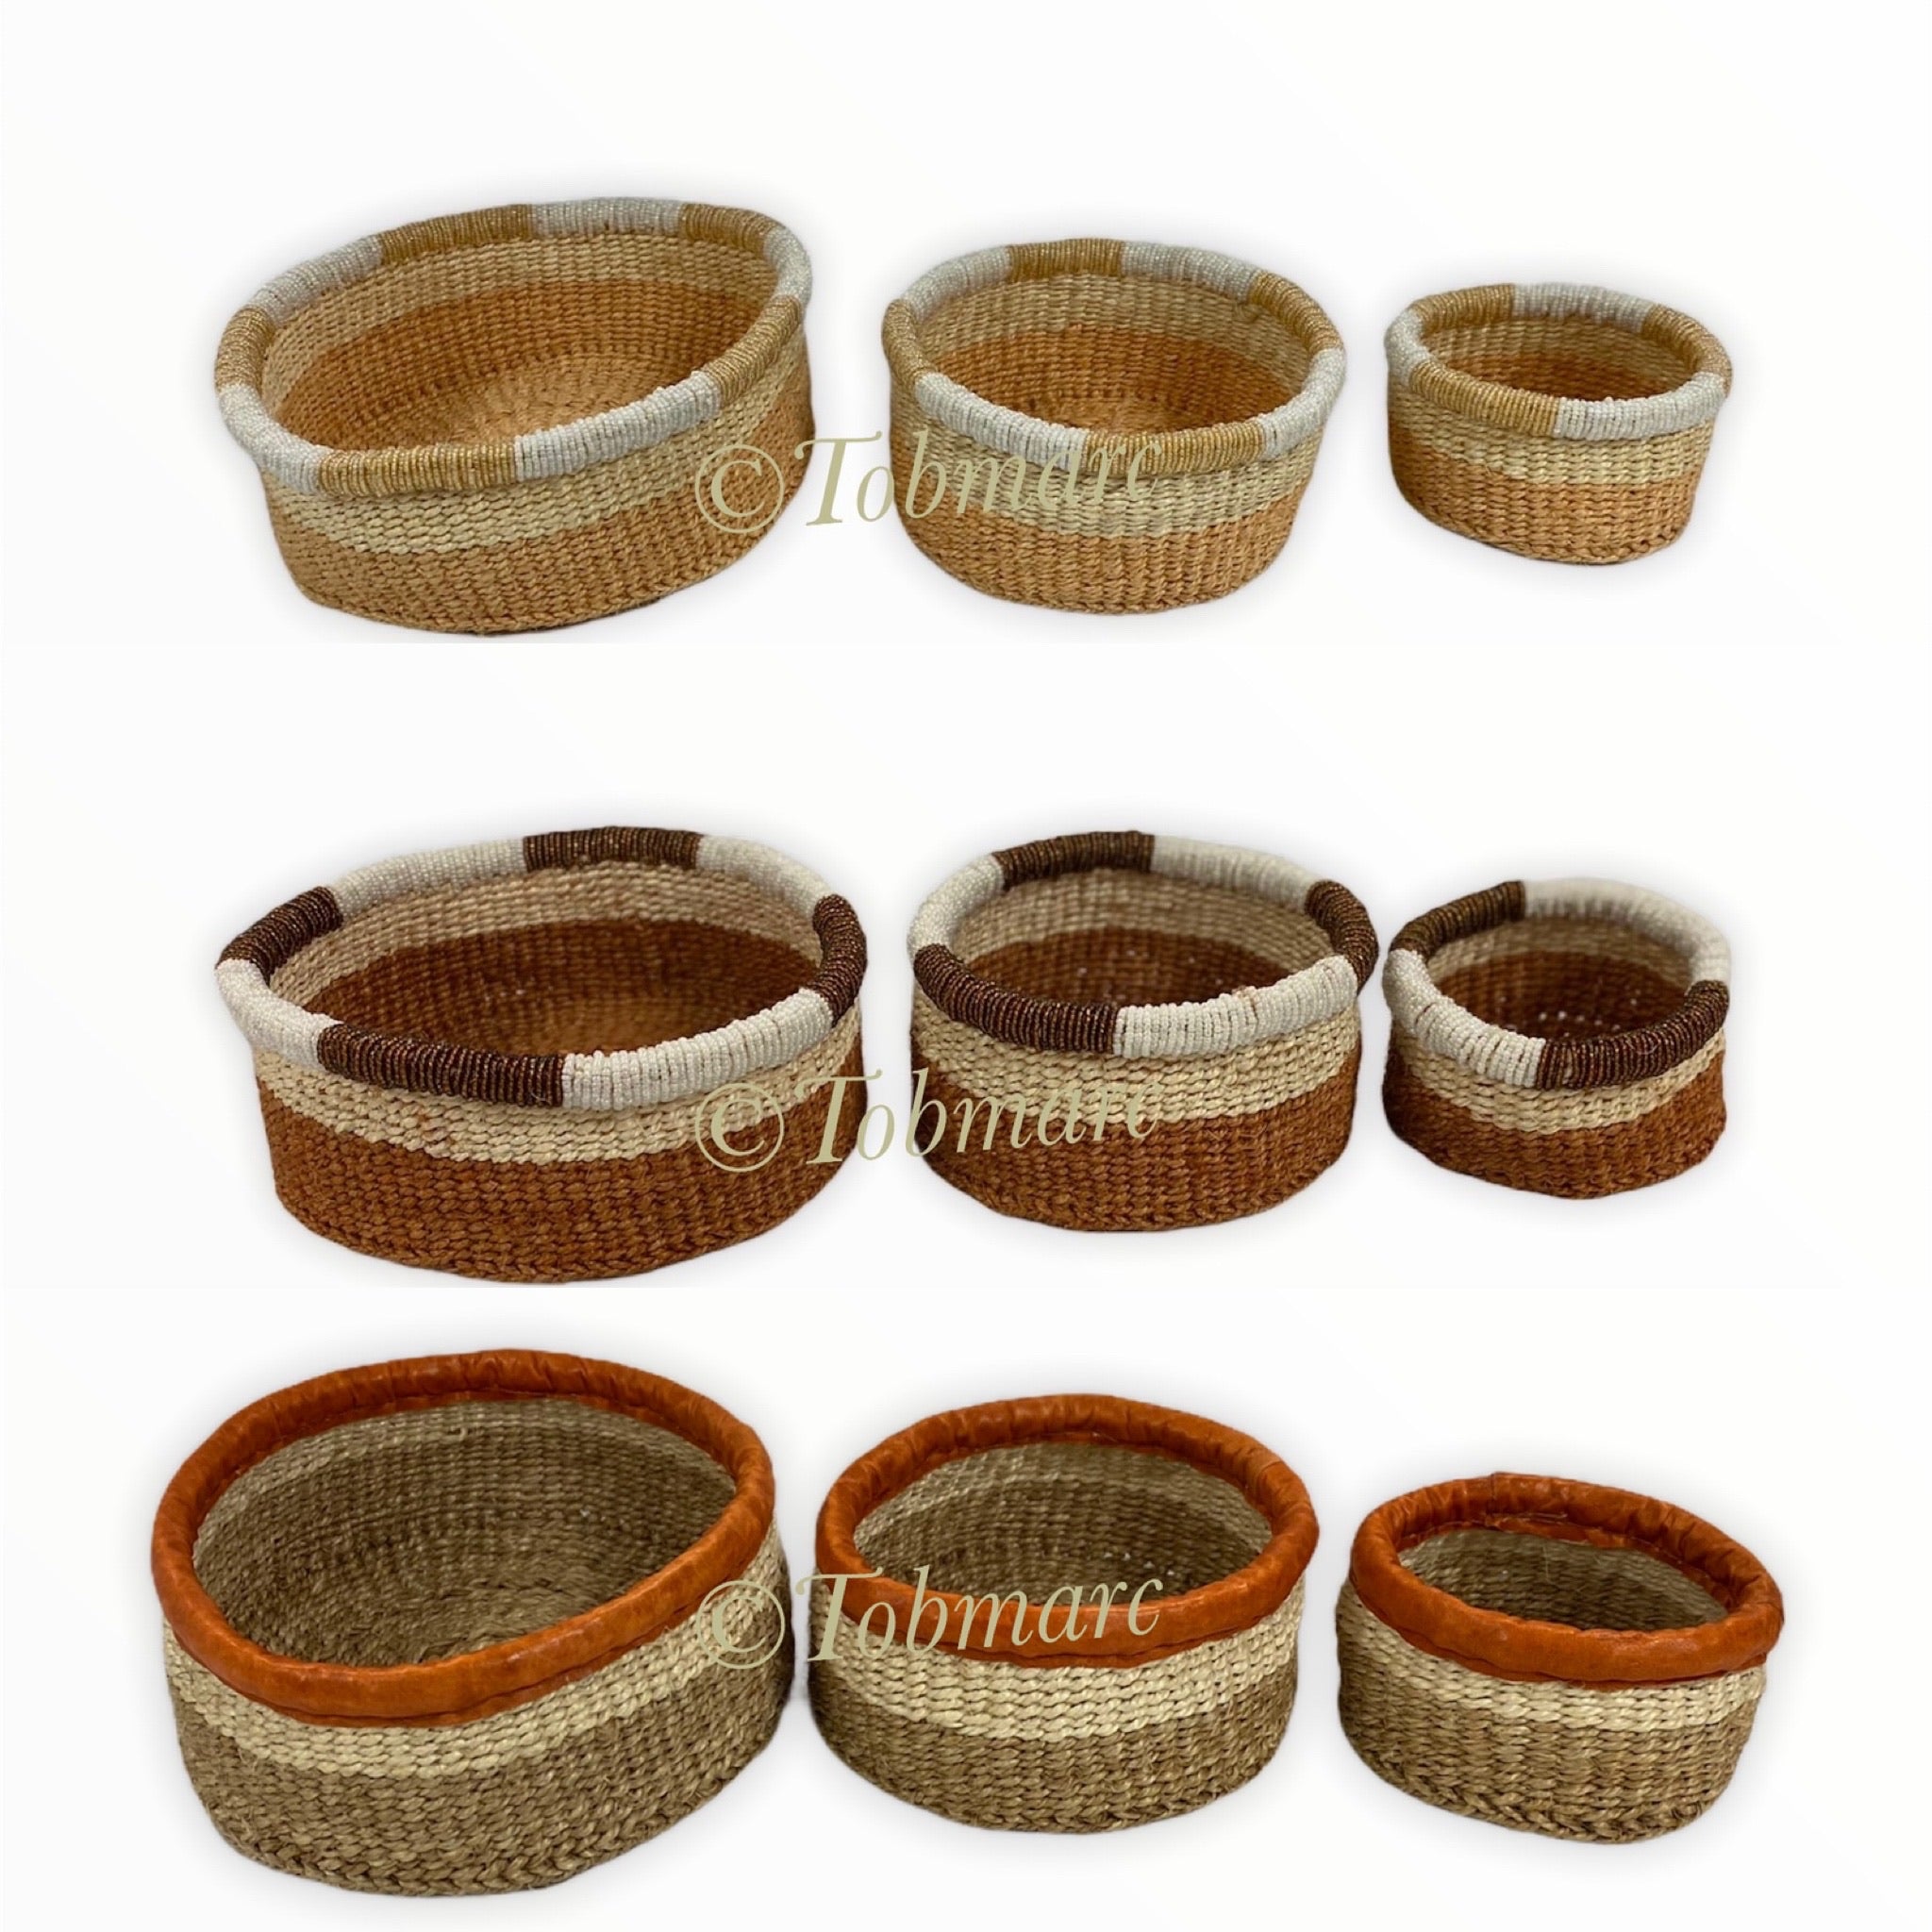 WOVEN STORAGE BASKET, Decorative Basket, Handmade Eco- Friendly